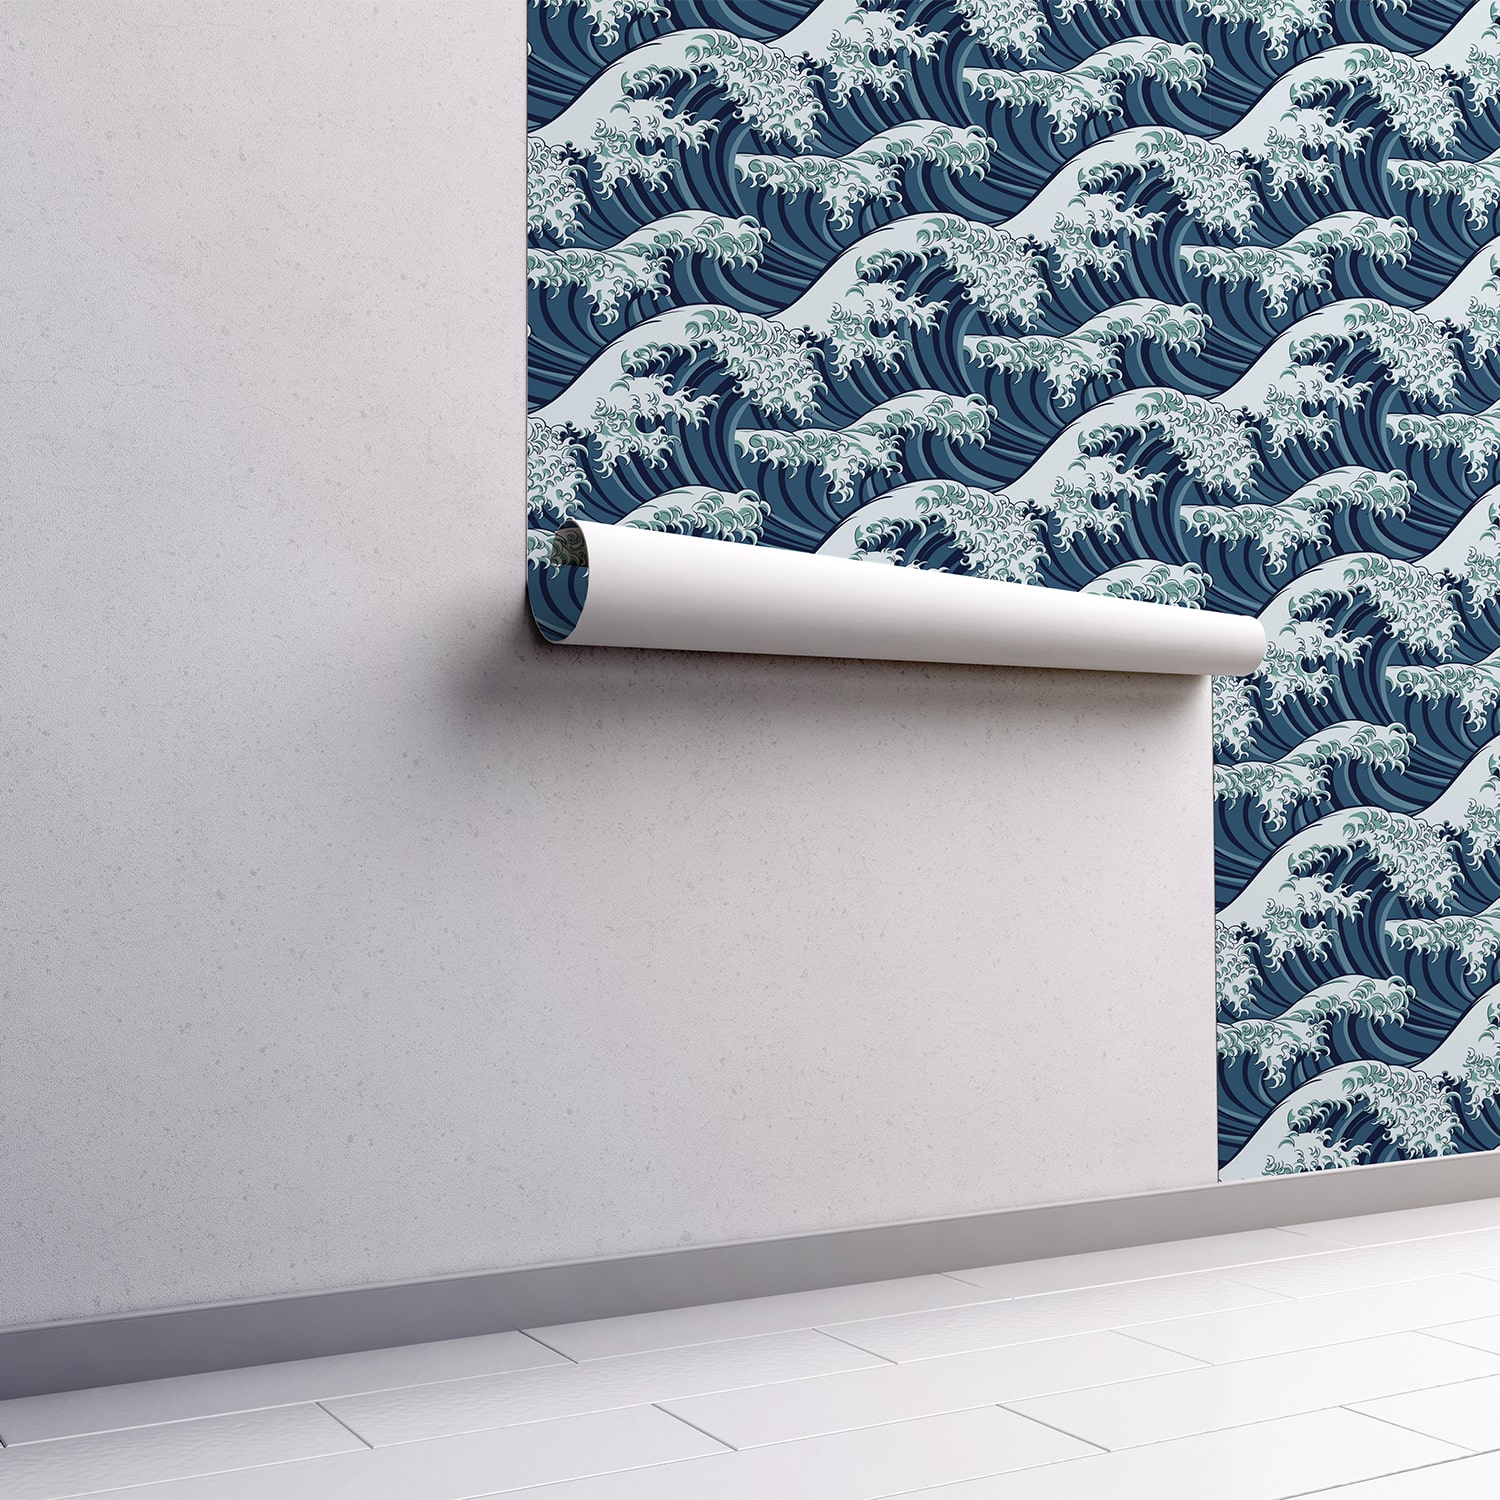 PP34-papier-peint-adhesif-decoratif-revetement-vinyle-motifs-la-vague-kanagawa-hokusai-renovation-meuble-mur-3